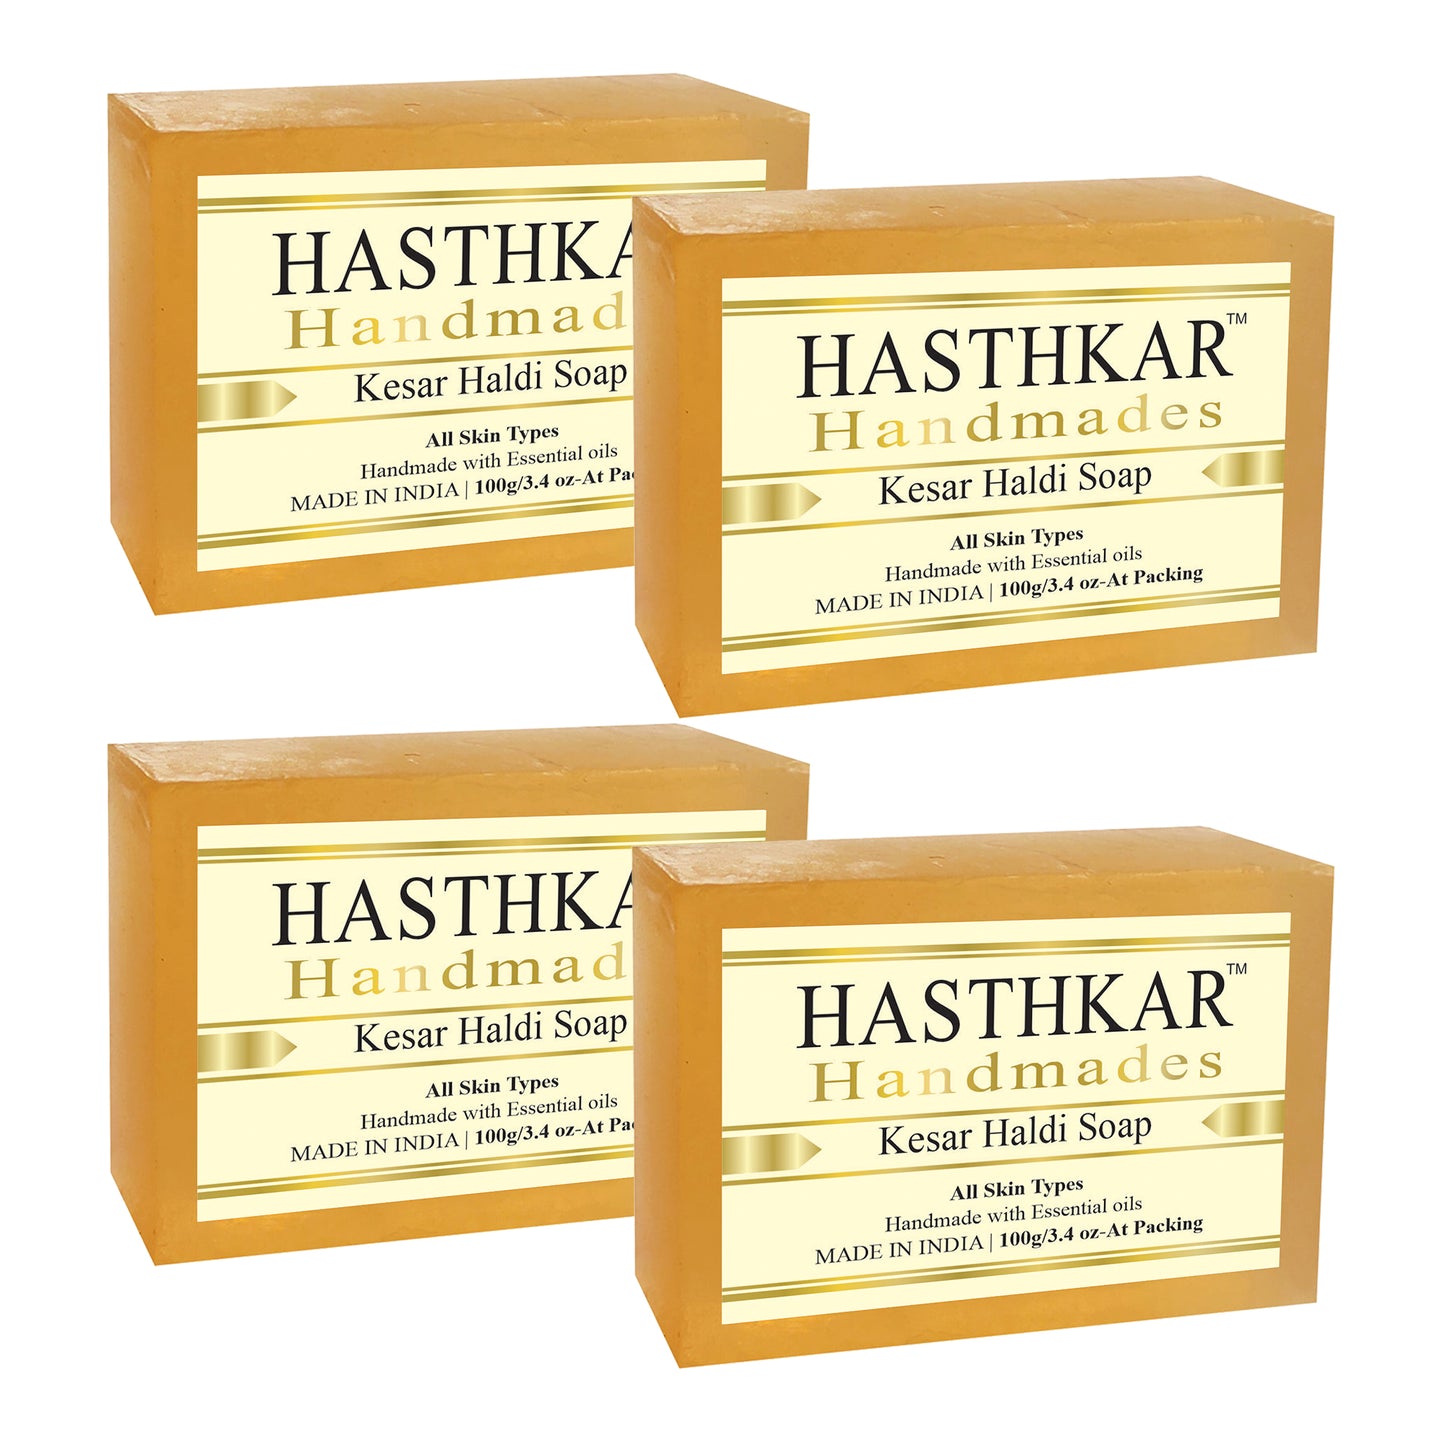 Hasthkar handmades kesar haldi bathing soap men women pack of 4